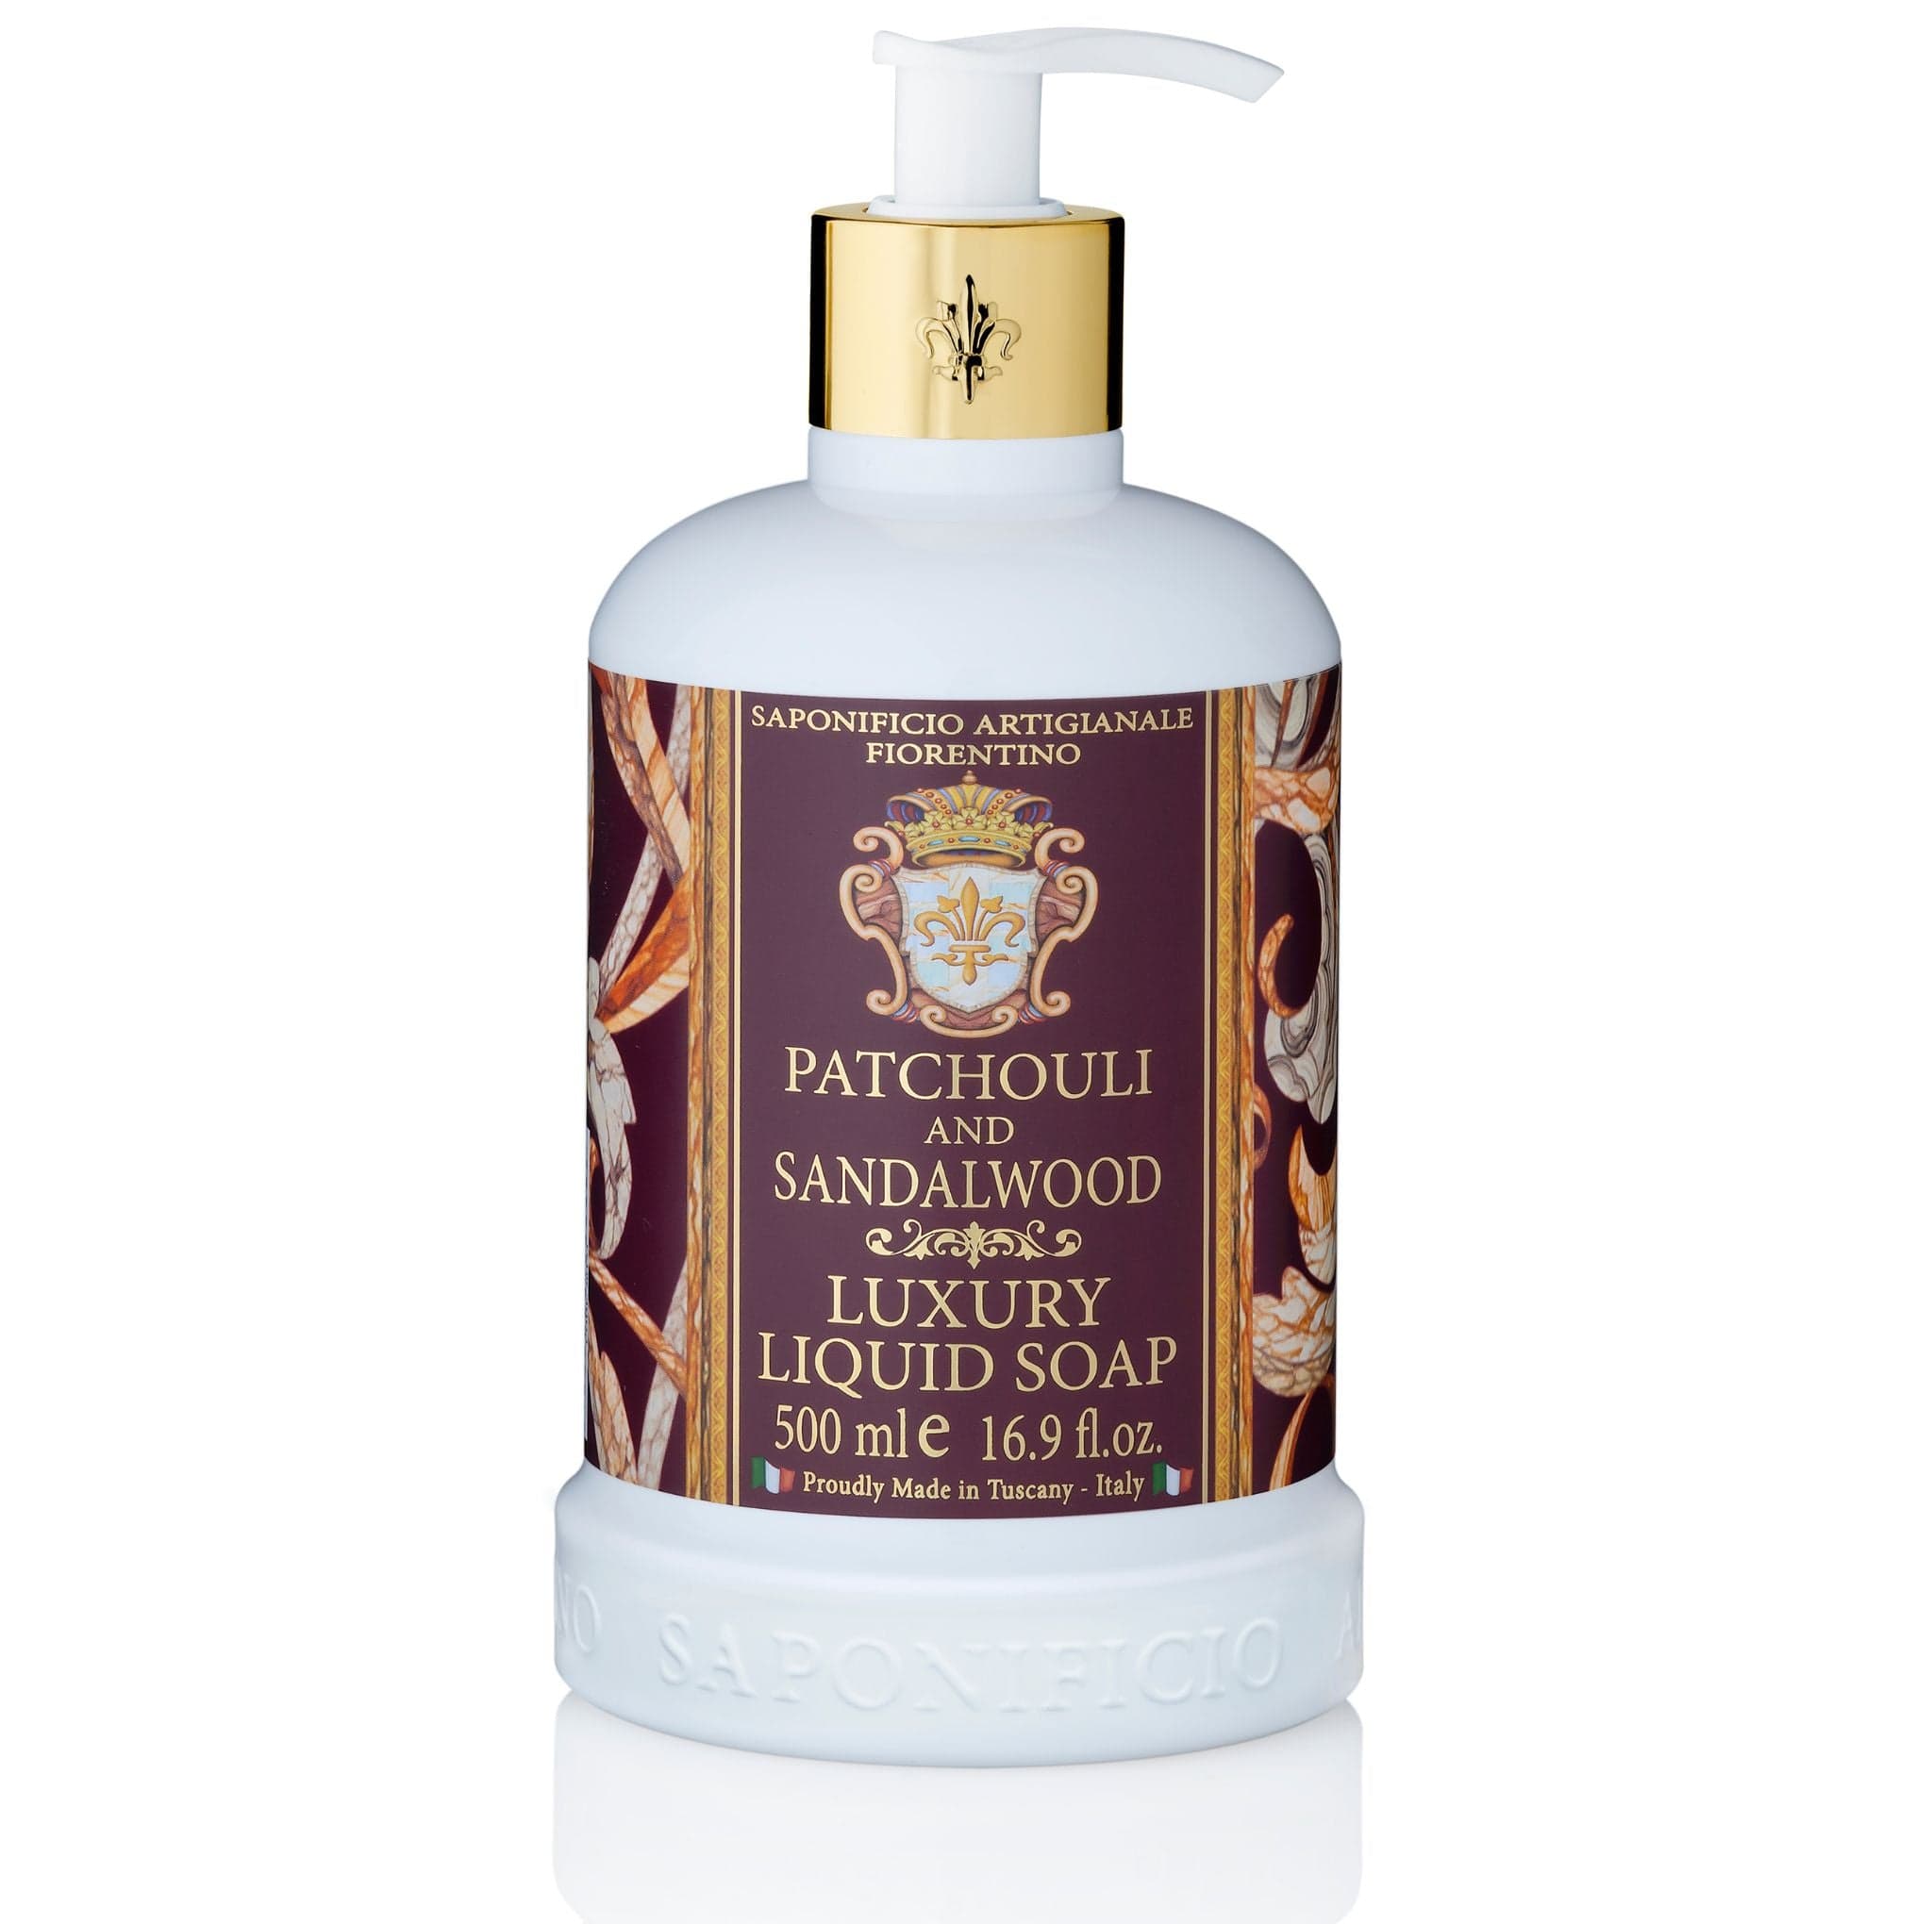 Saponificio Artigianale Fiorentino Liquid Hand Soap Bundle Set Patchouli & Sandalwood Liquid Soap + Bodywash + 3x125g Bar Soap Brand